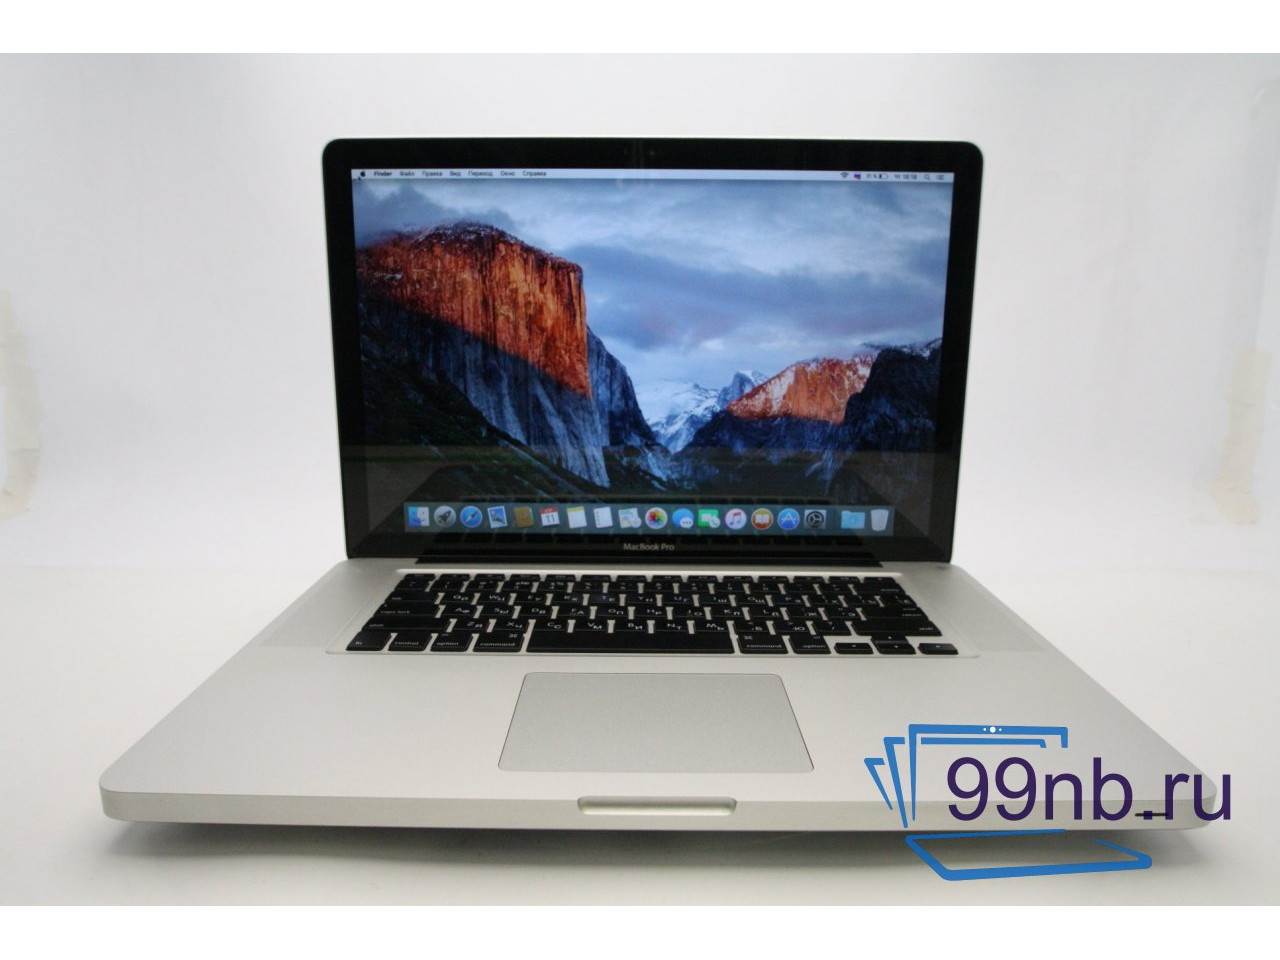 Macbook pro15 mid 2010